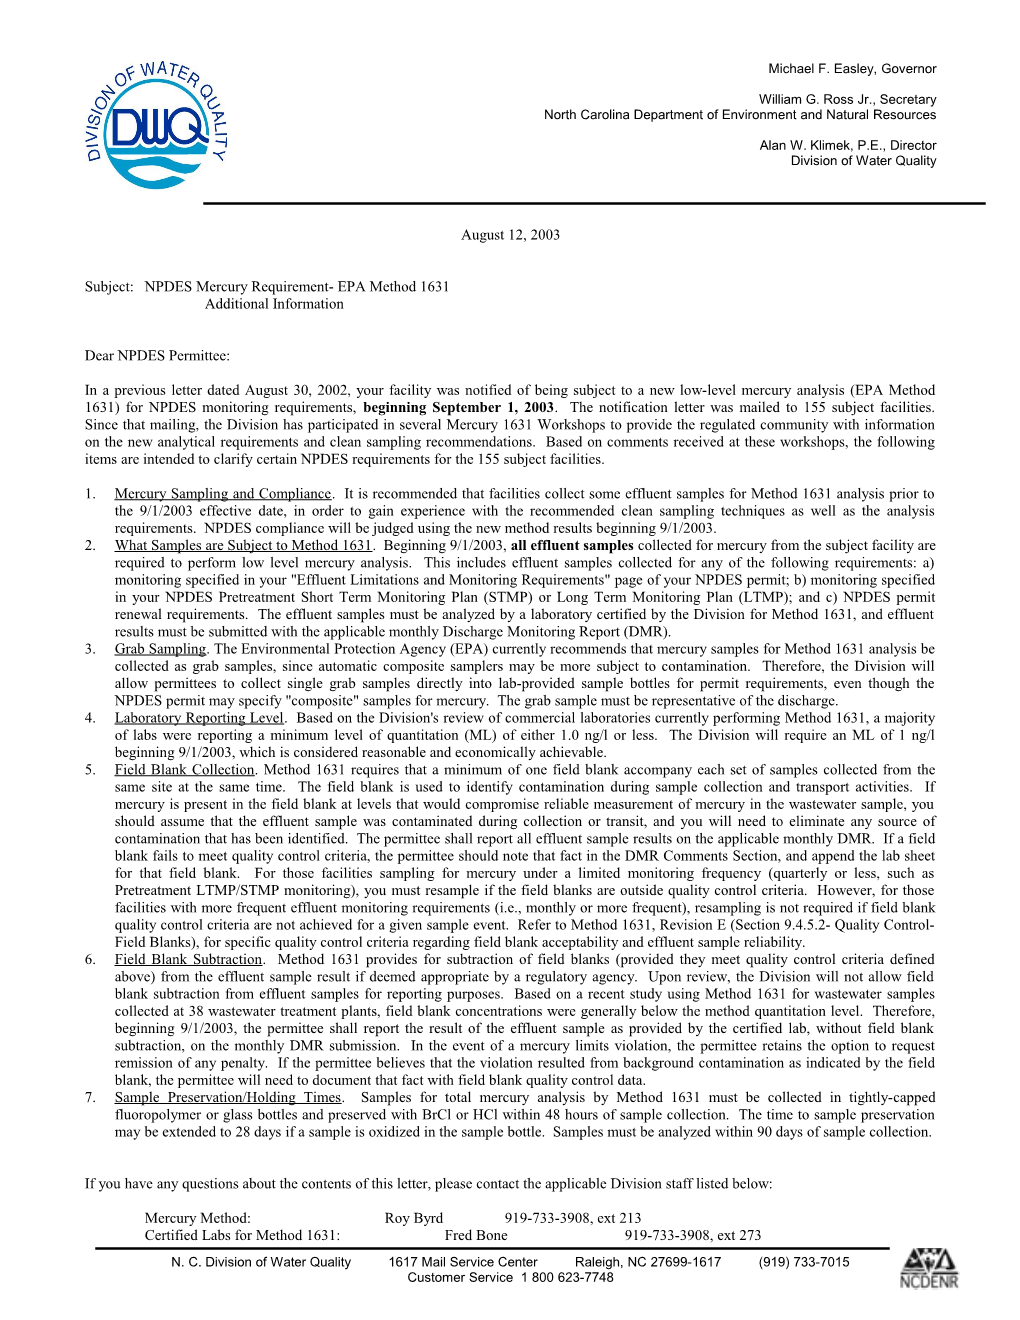 Subject:NPDES Mercury Requirement- EPA Method 1631